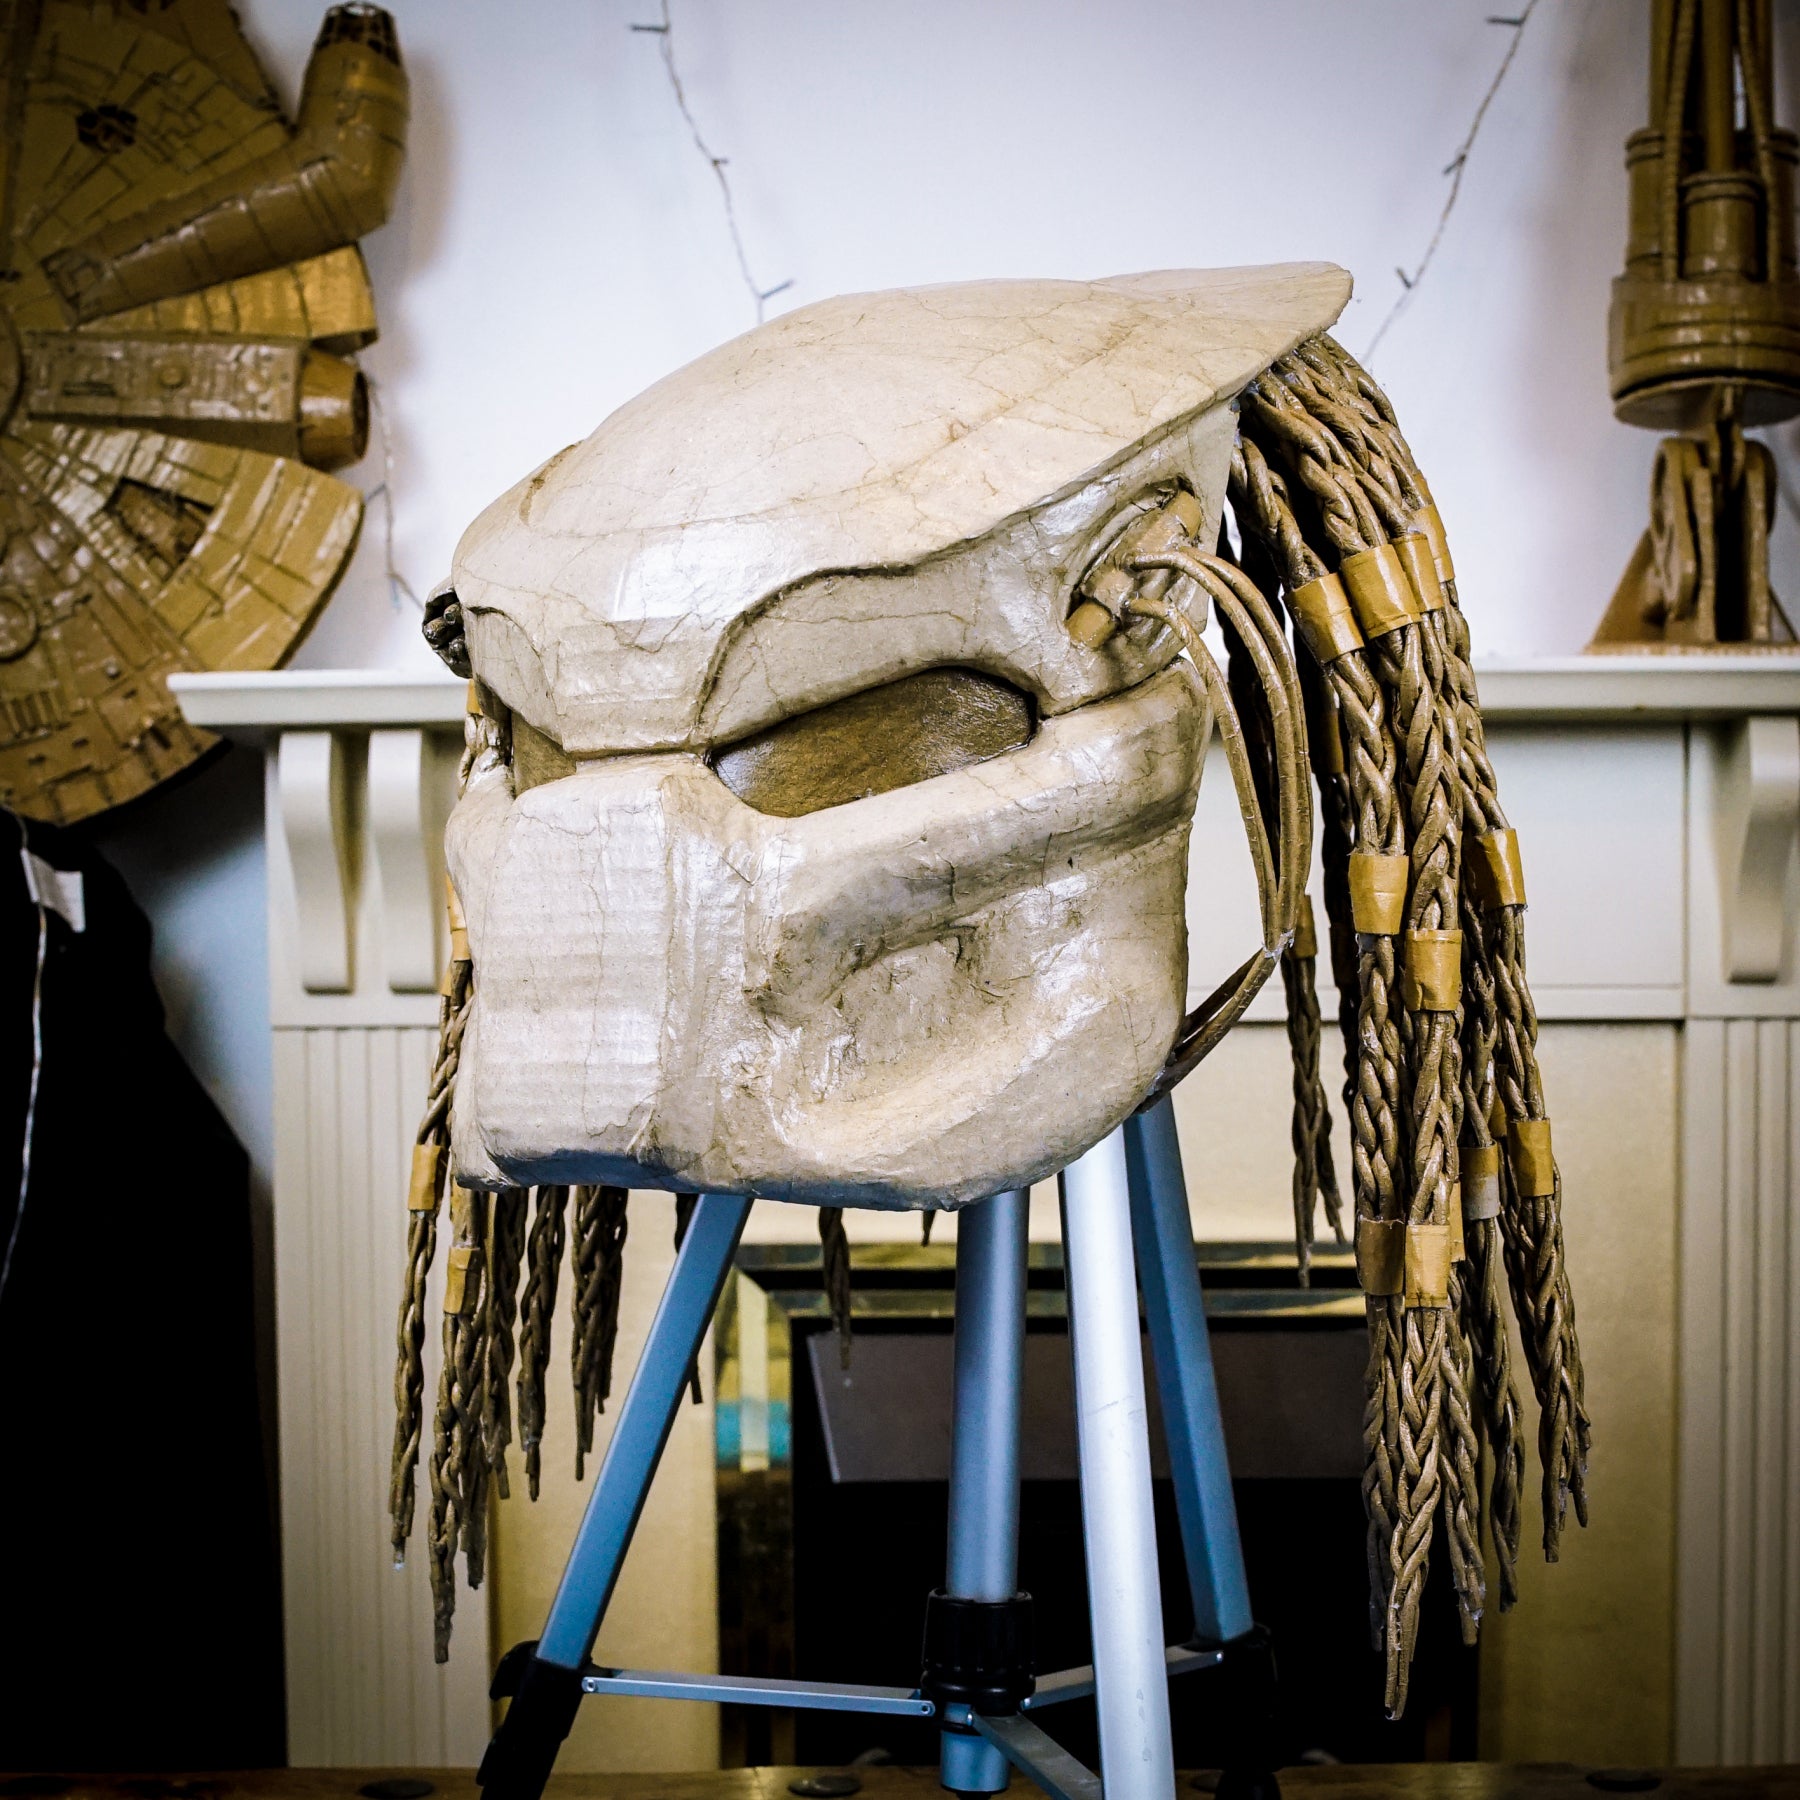 Fantasi mm Modsige Predator's helmet TEMPLATES for cardboard DIY – Epic Cardboard Props